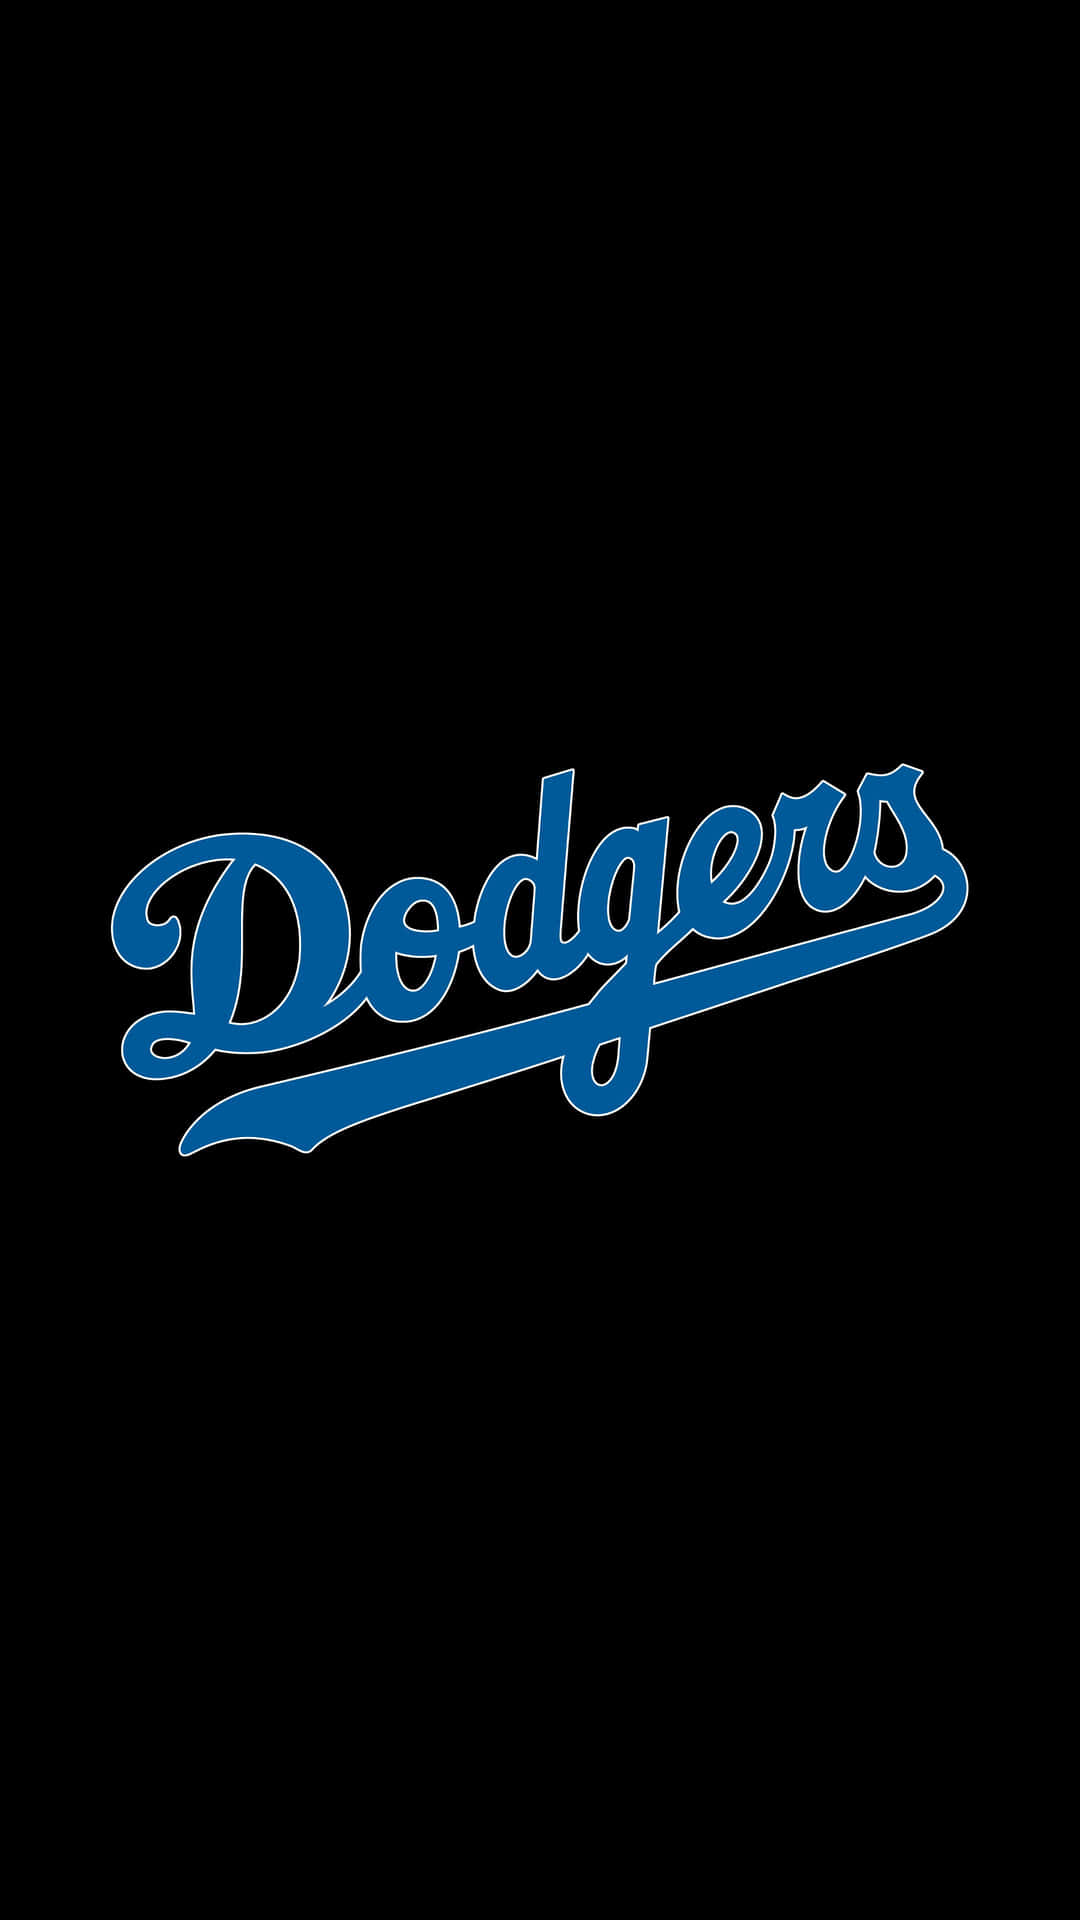 Download Dodgers iPhone Black Background Wallpaper